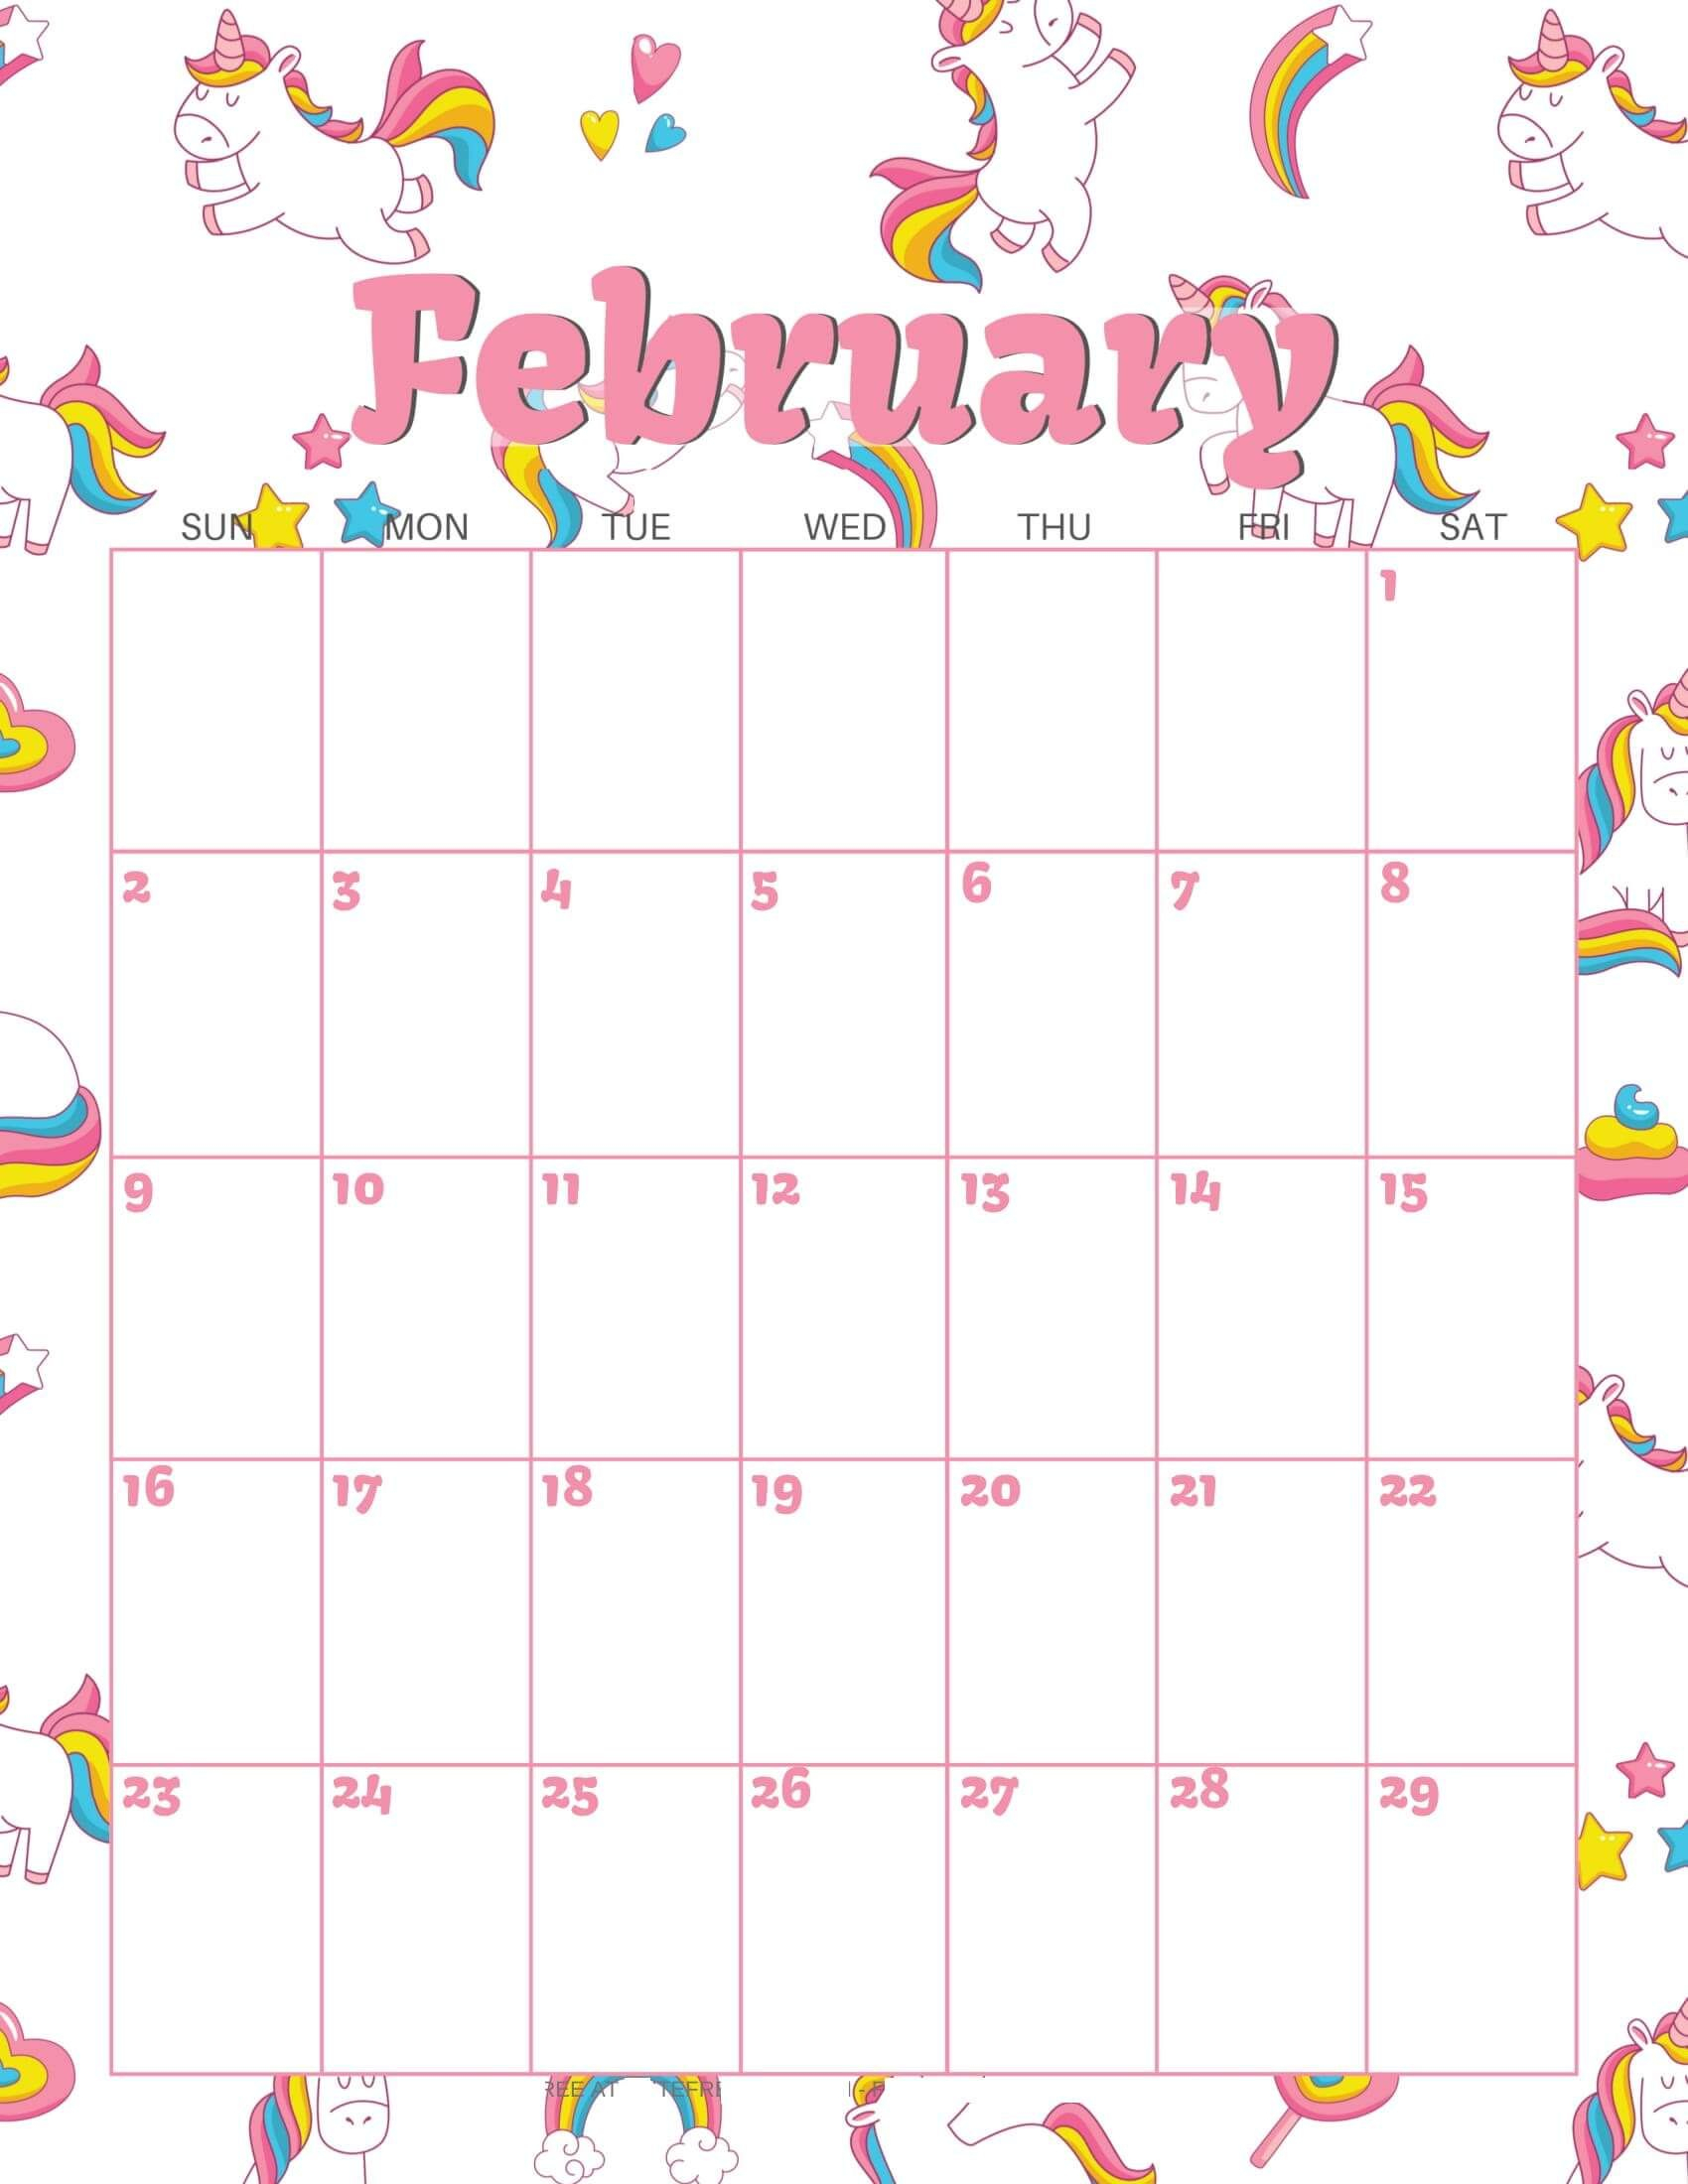 Cute February 2020 Calendar Colorful In 2020 | January